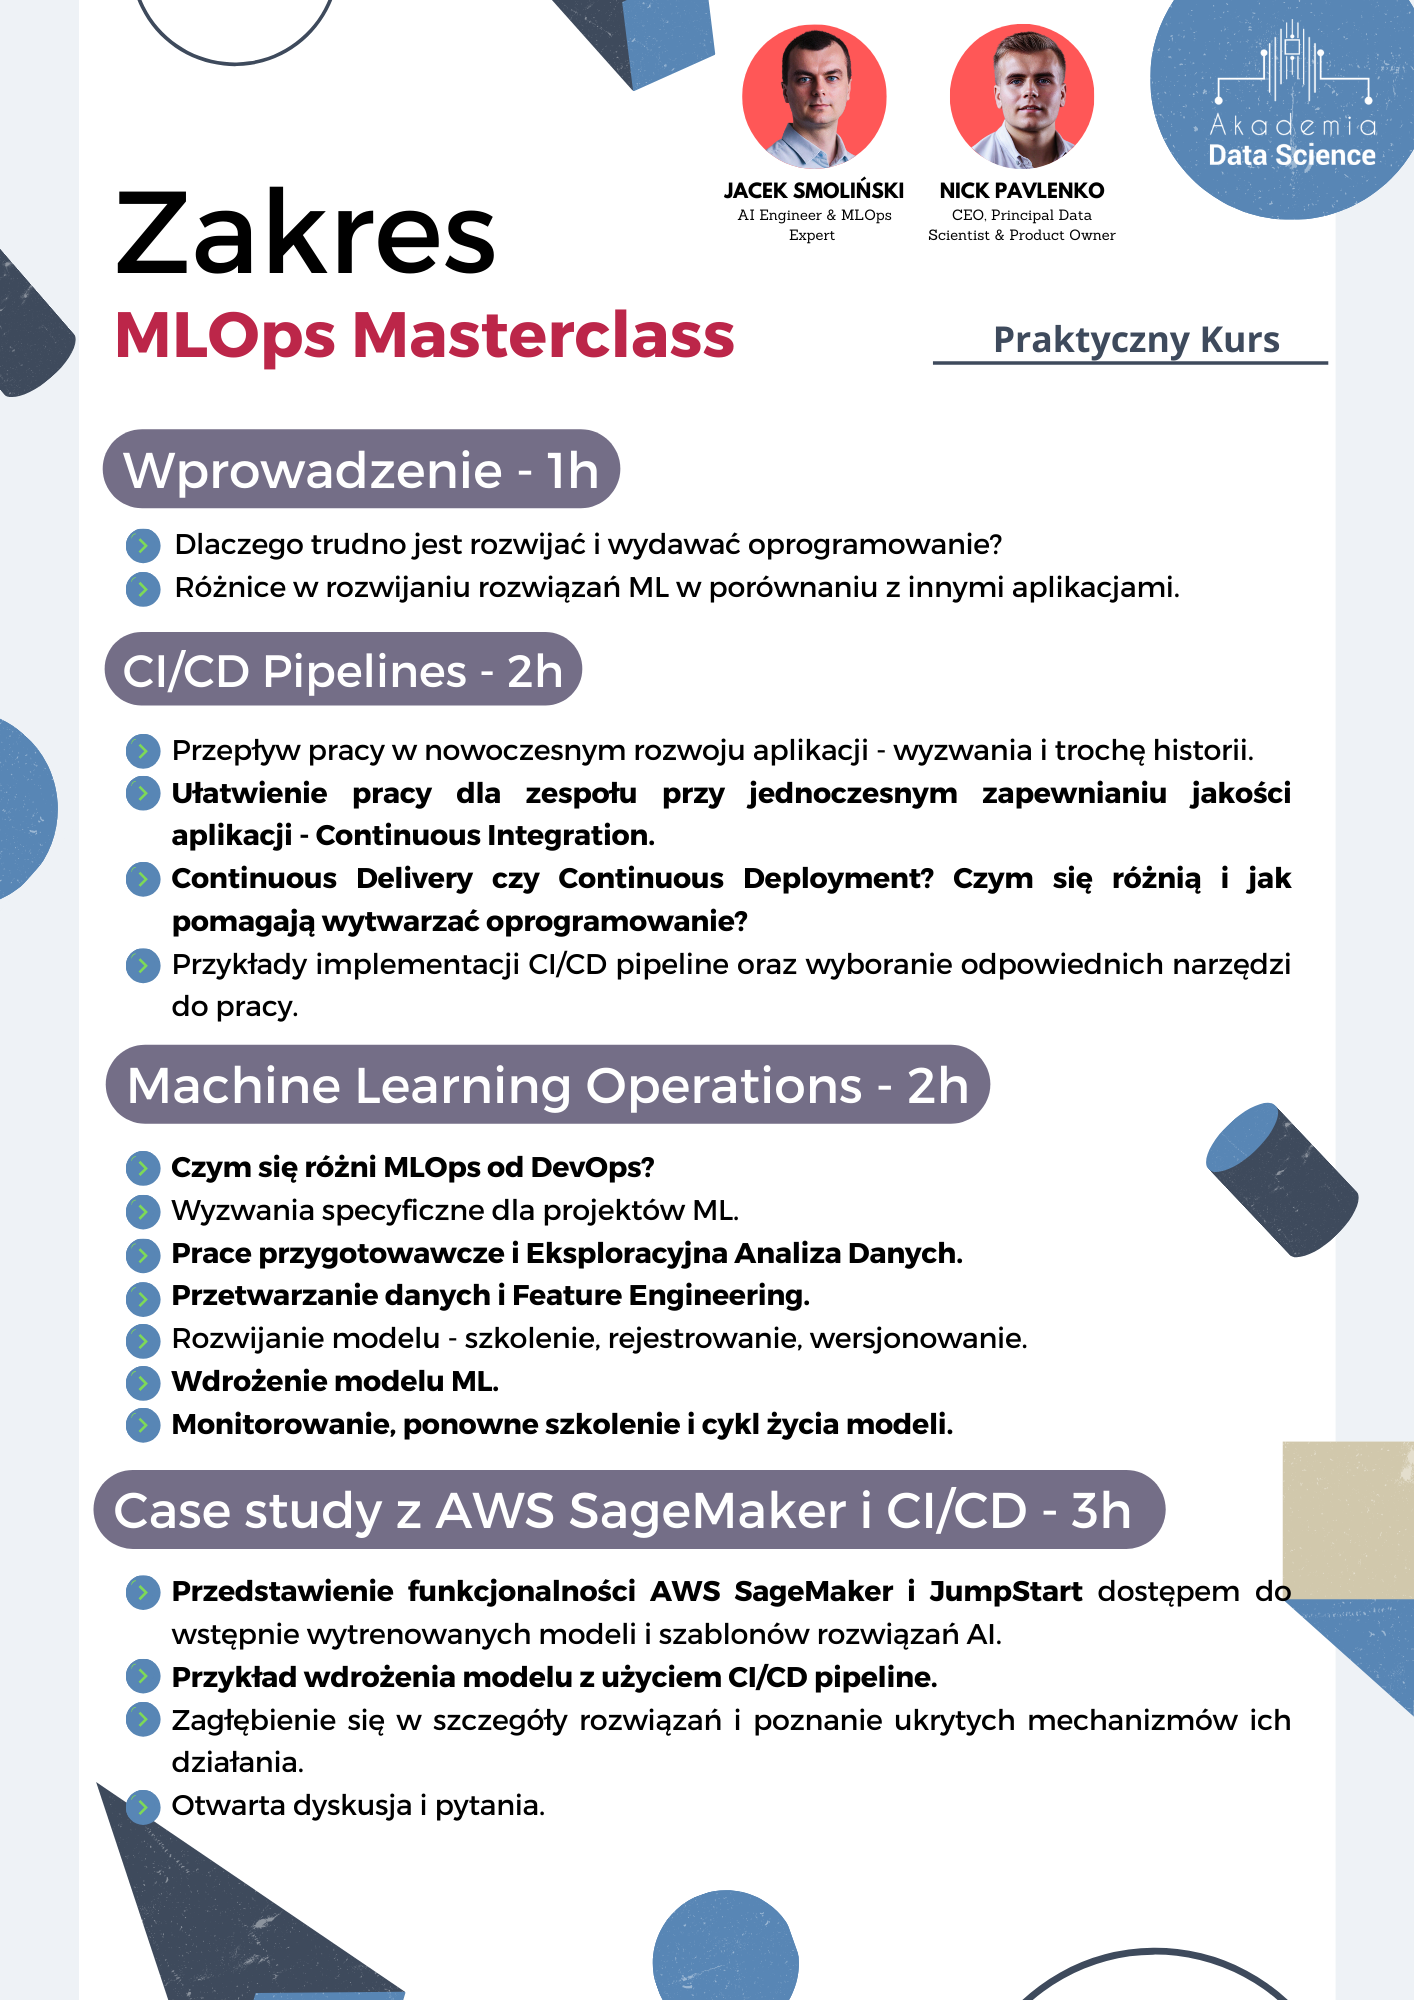 Zakres materiałów kursu MLOps Masterclass